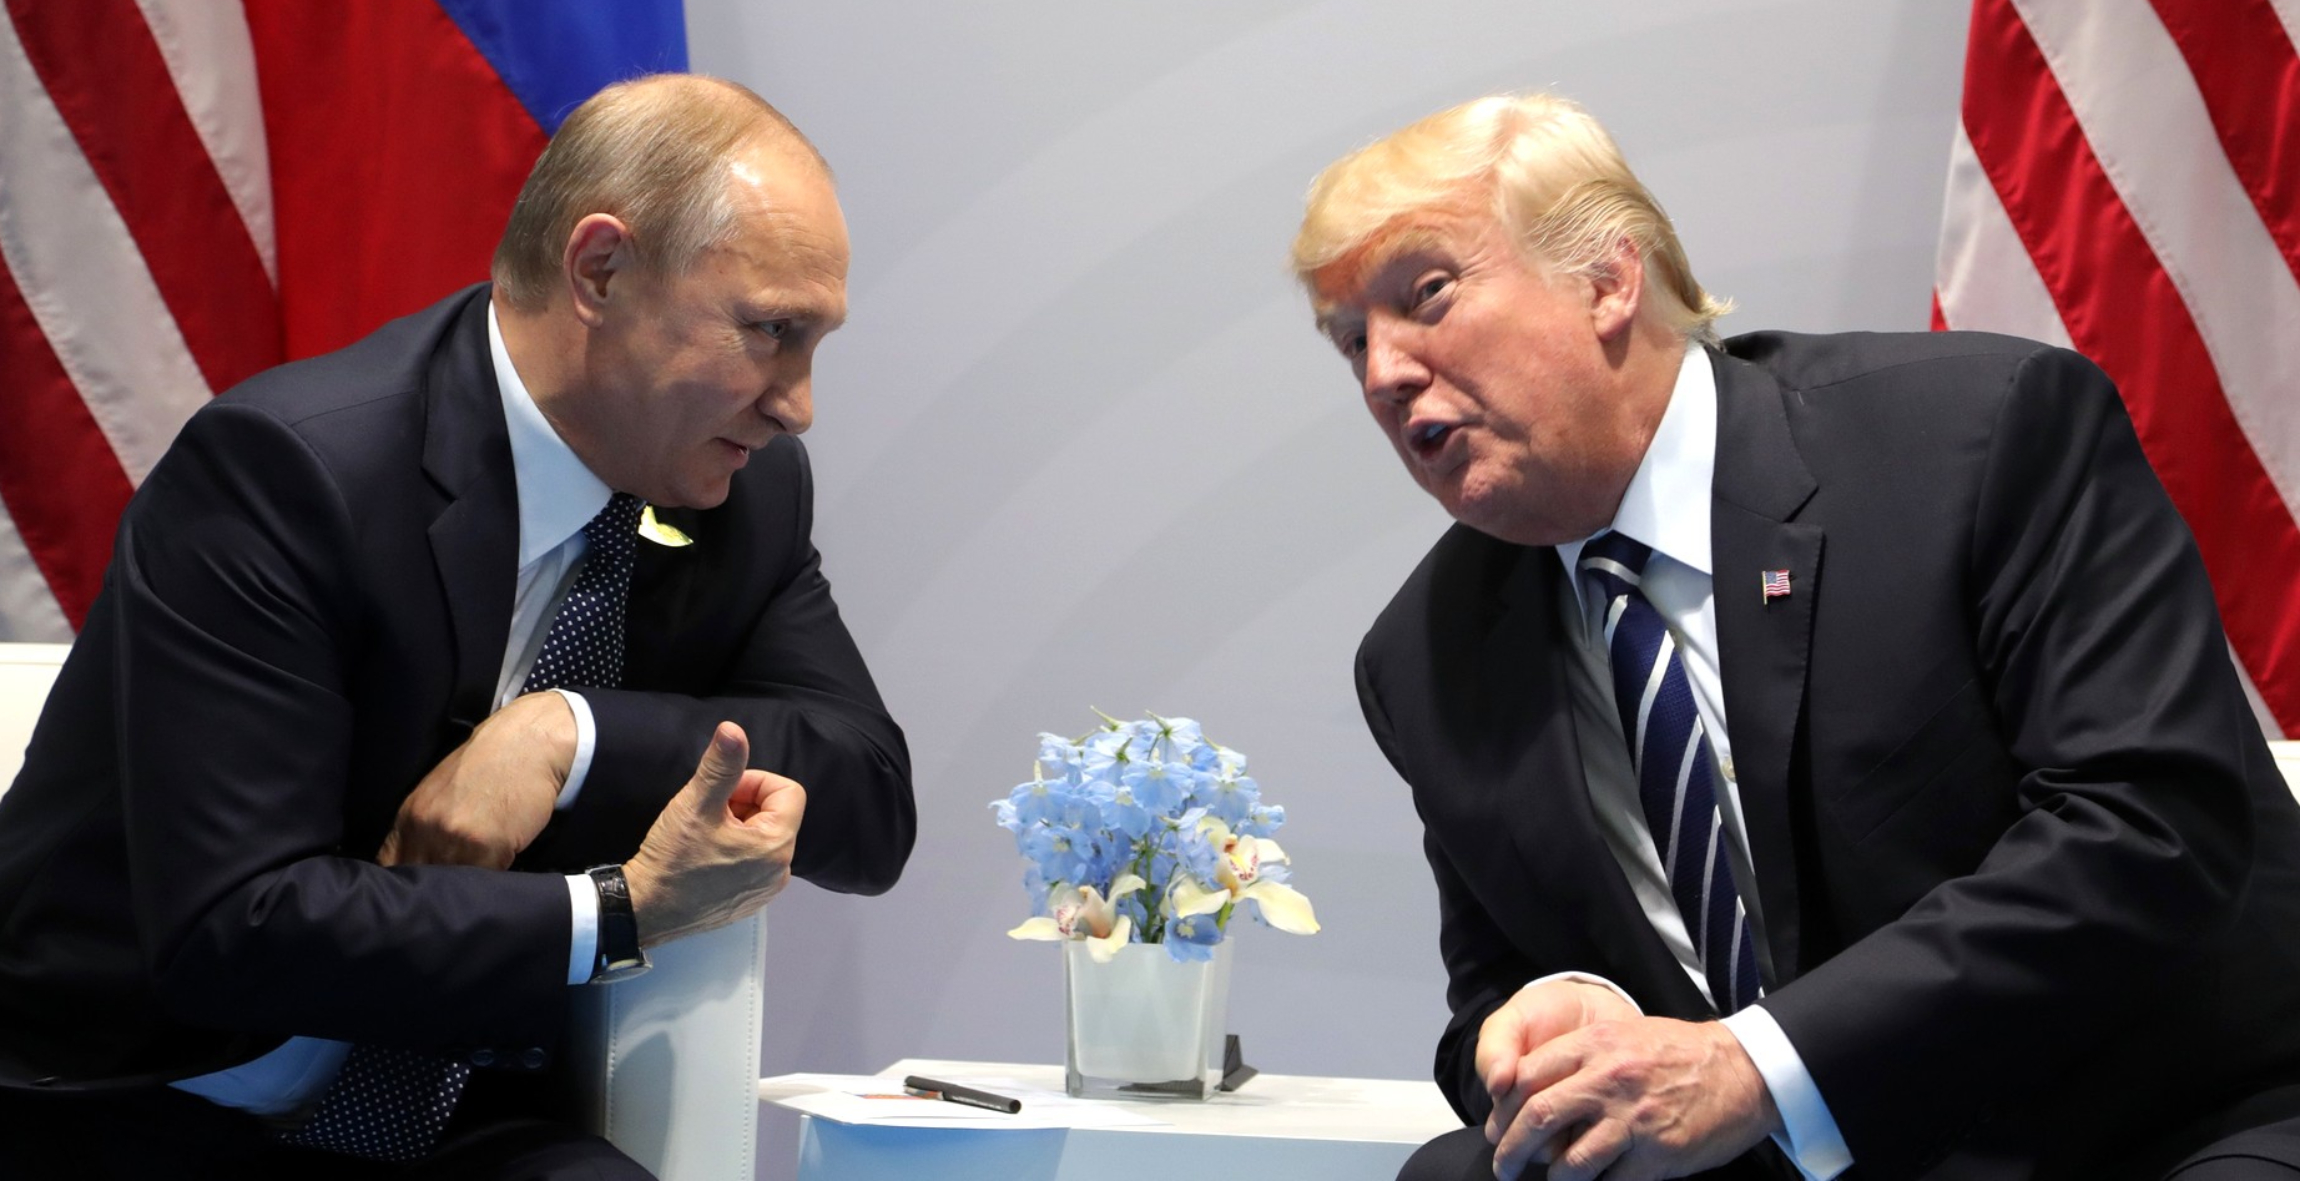 Vladimir Putin and Donald Trump meet at the G-20 Hamburg Summit, July 7, 2017. Source: kremlin.ru.